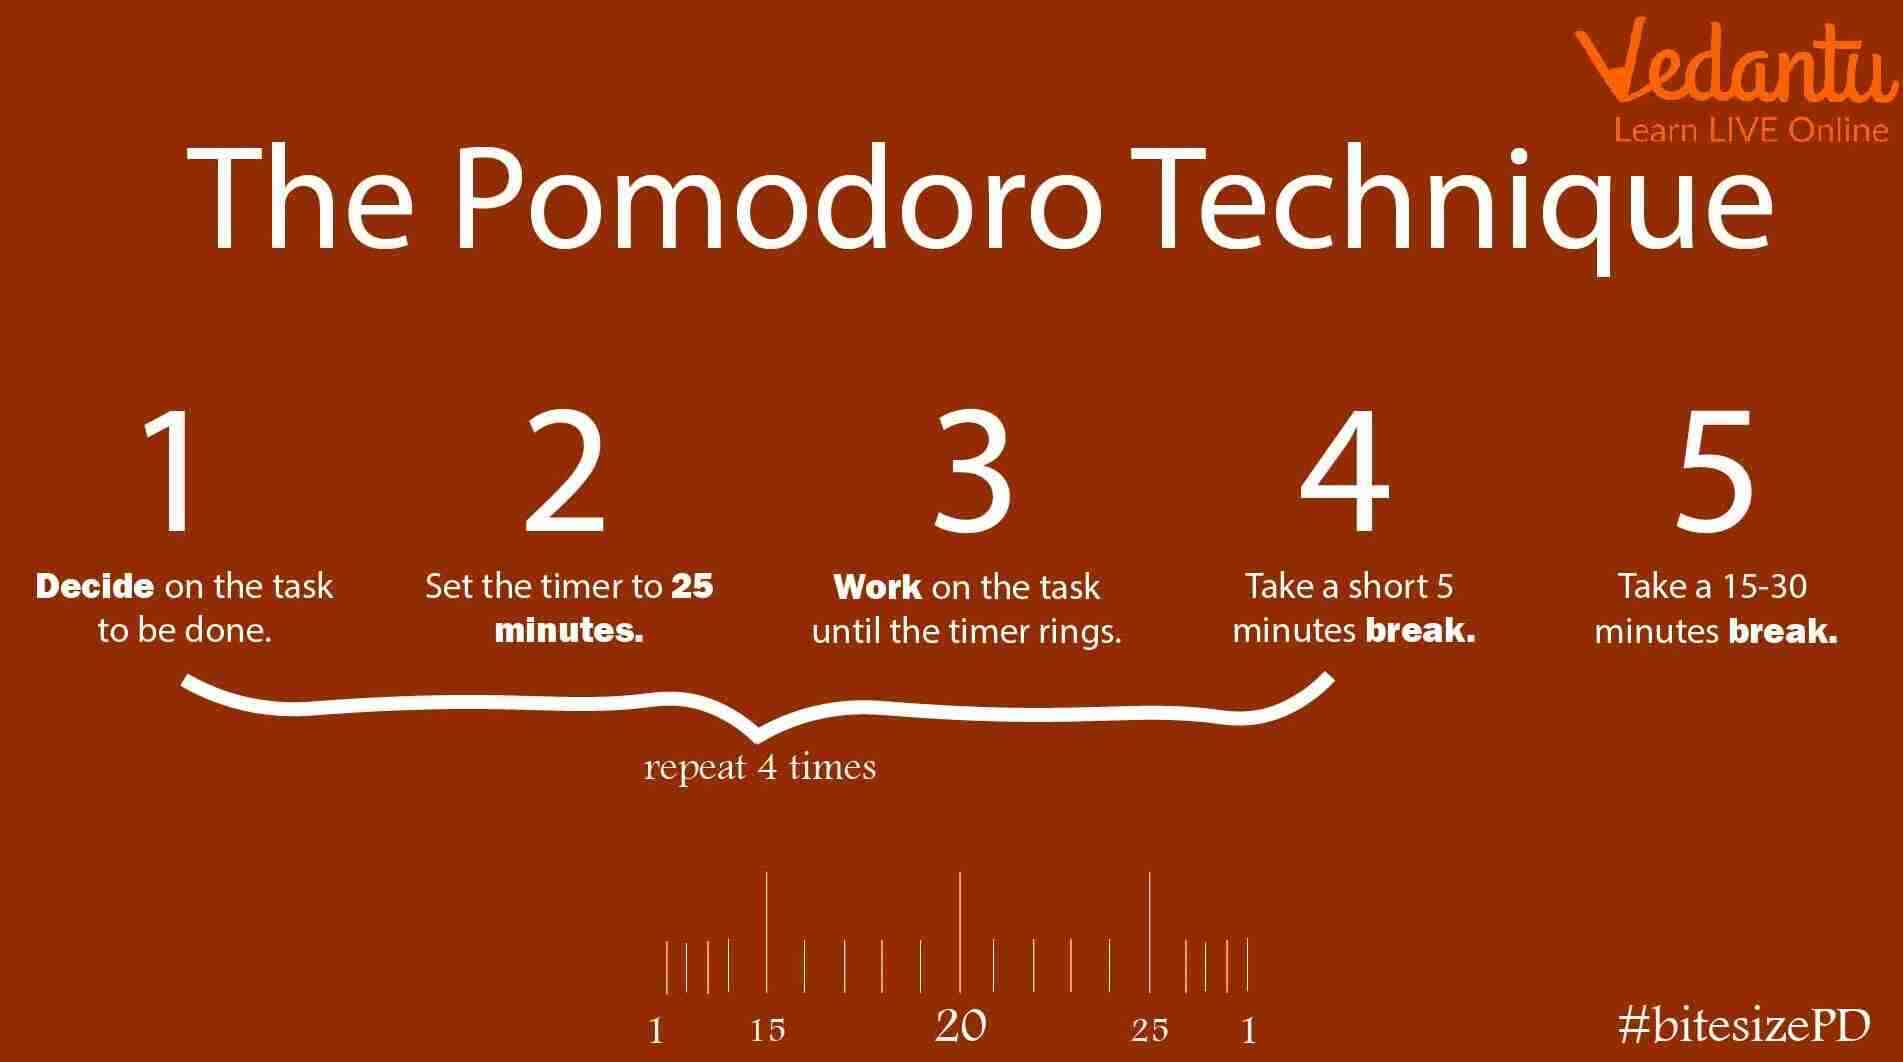 steps of the Pomodoro technique